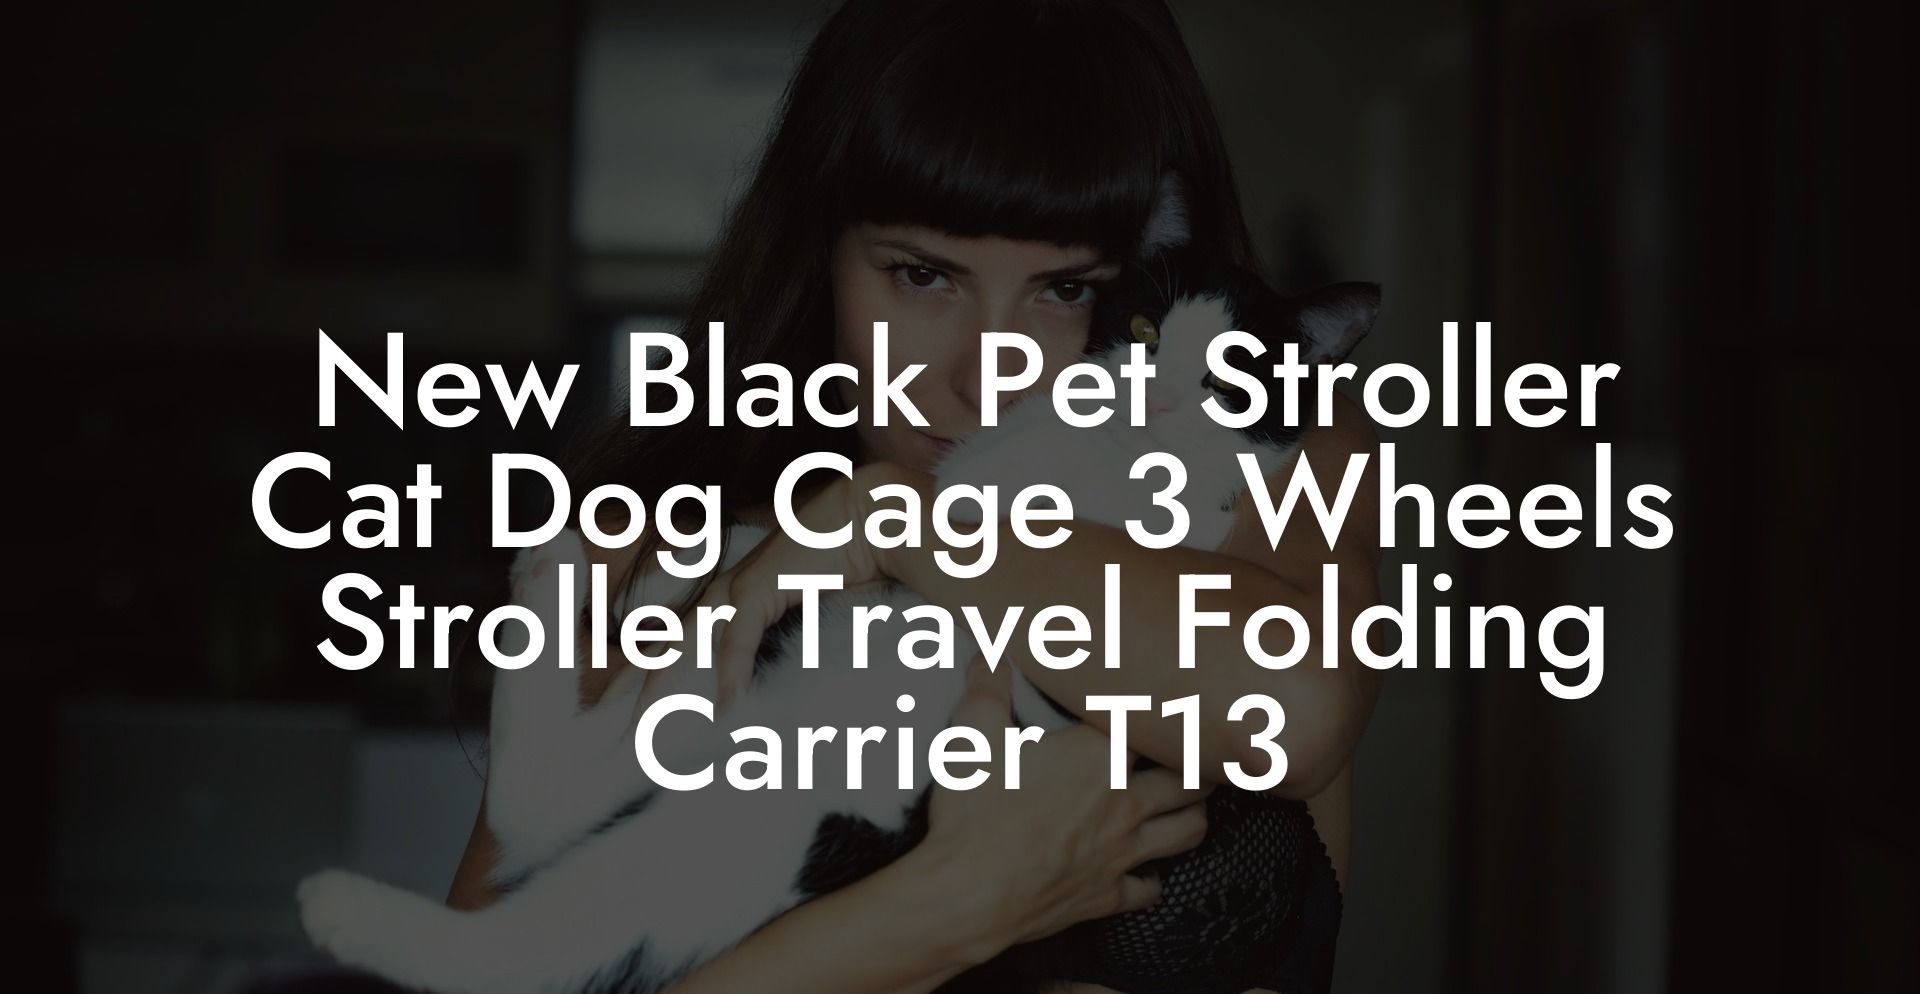 New Black Pet Stroller Cat Dog Cage 3 Wheels Stroller Travel Folding Carrier T13